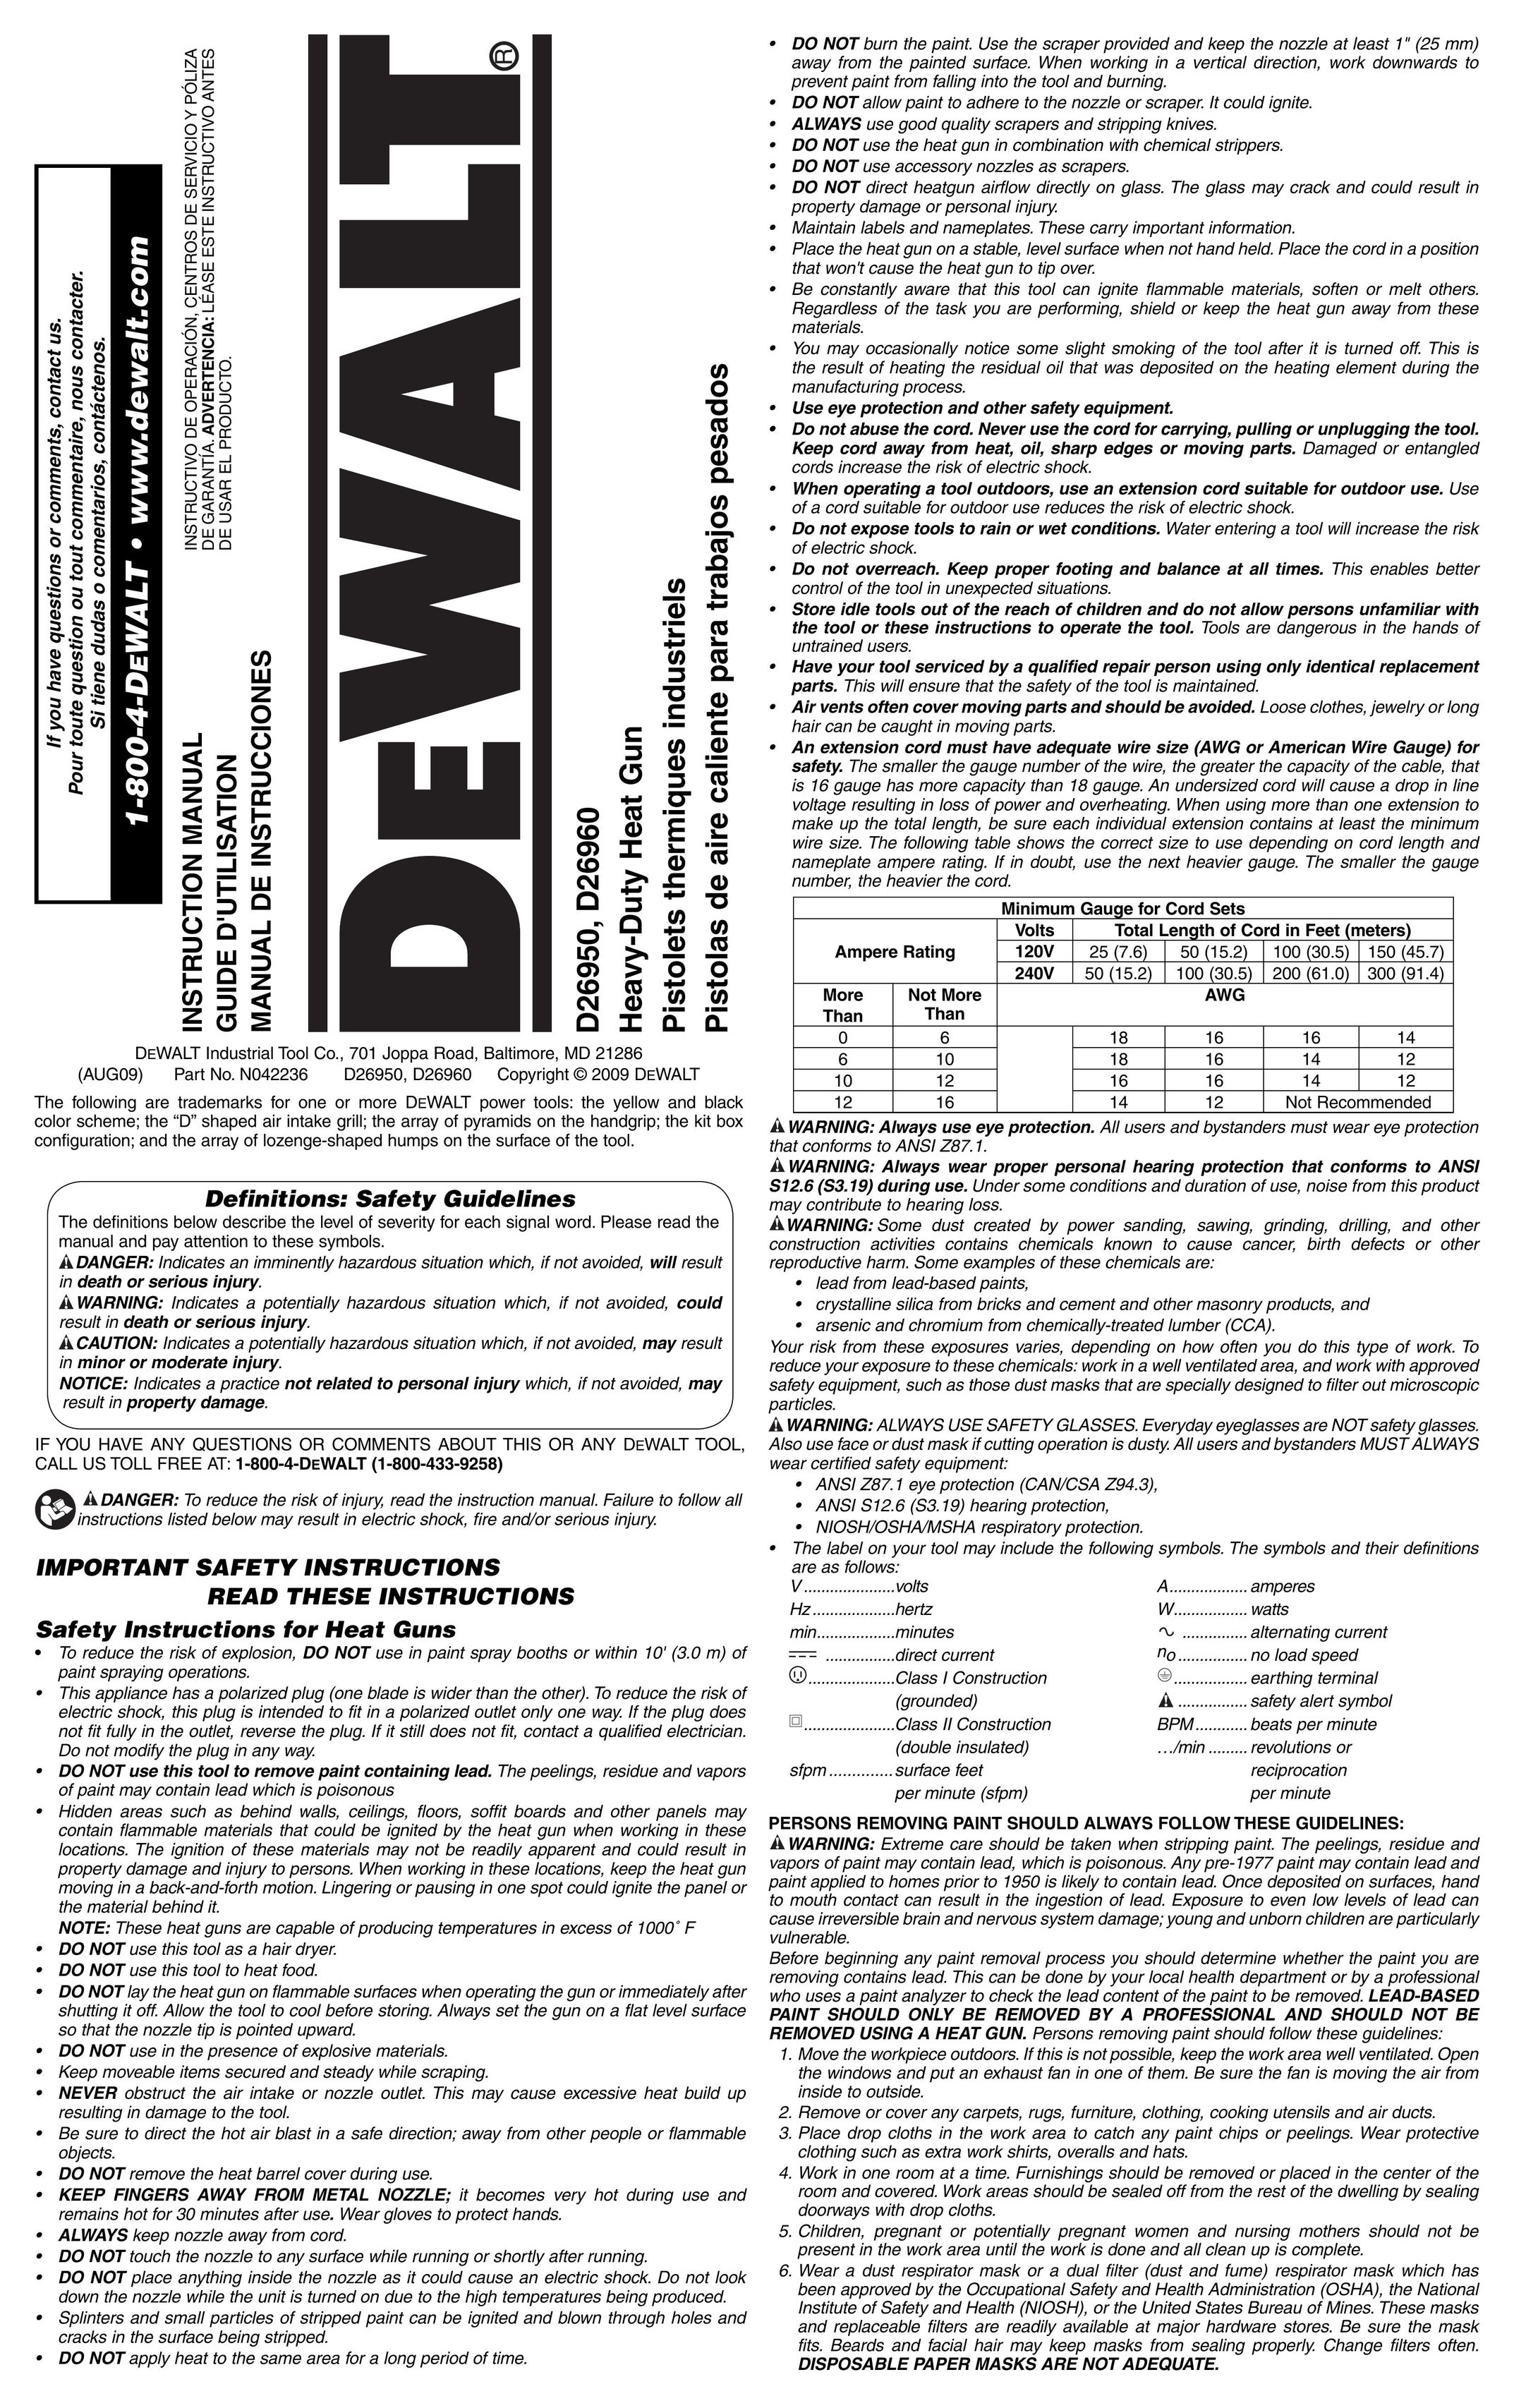 DeWalt D26950 Electric Heater User Manual